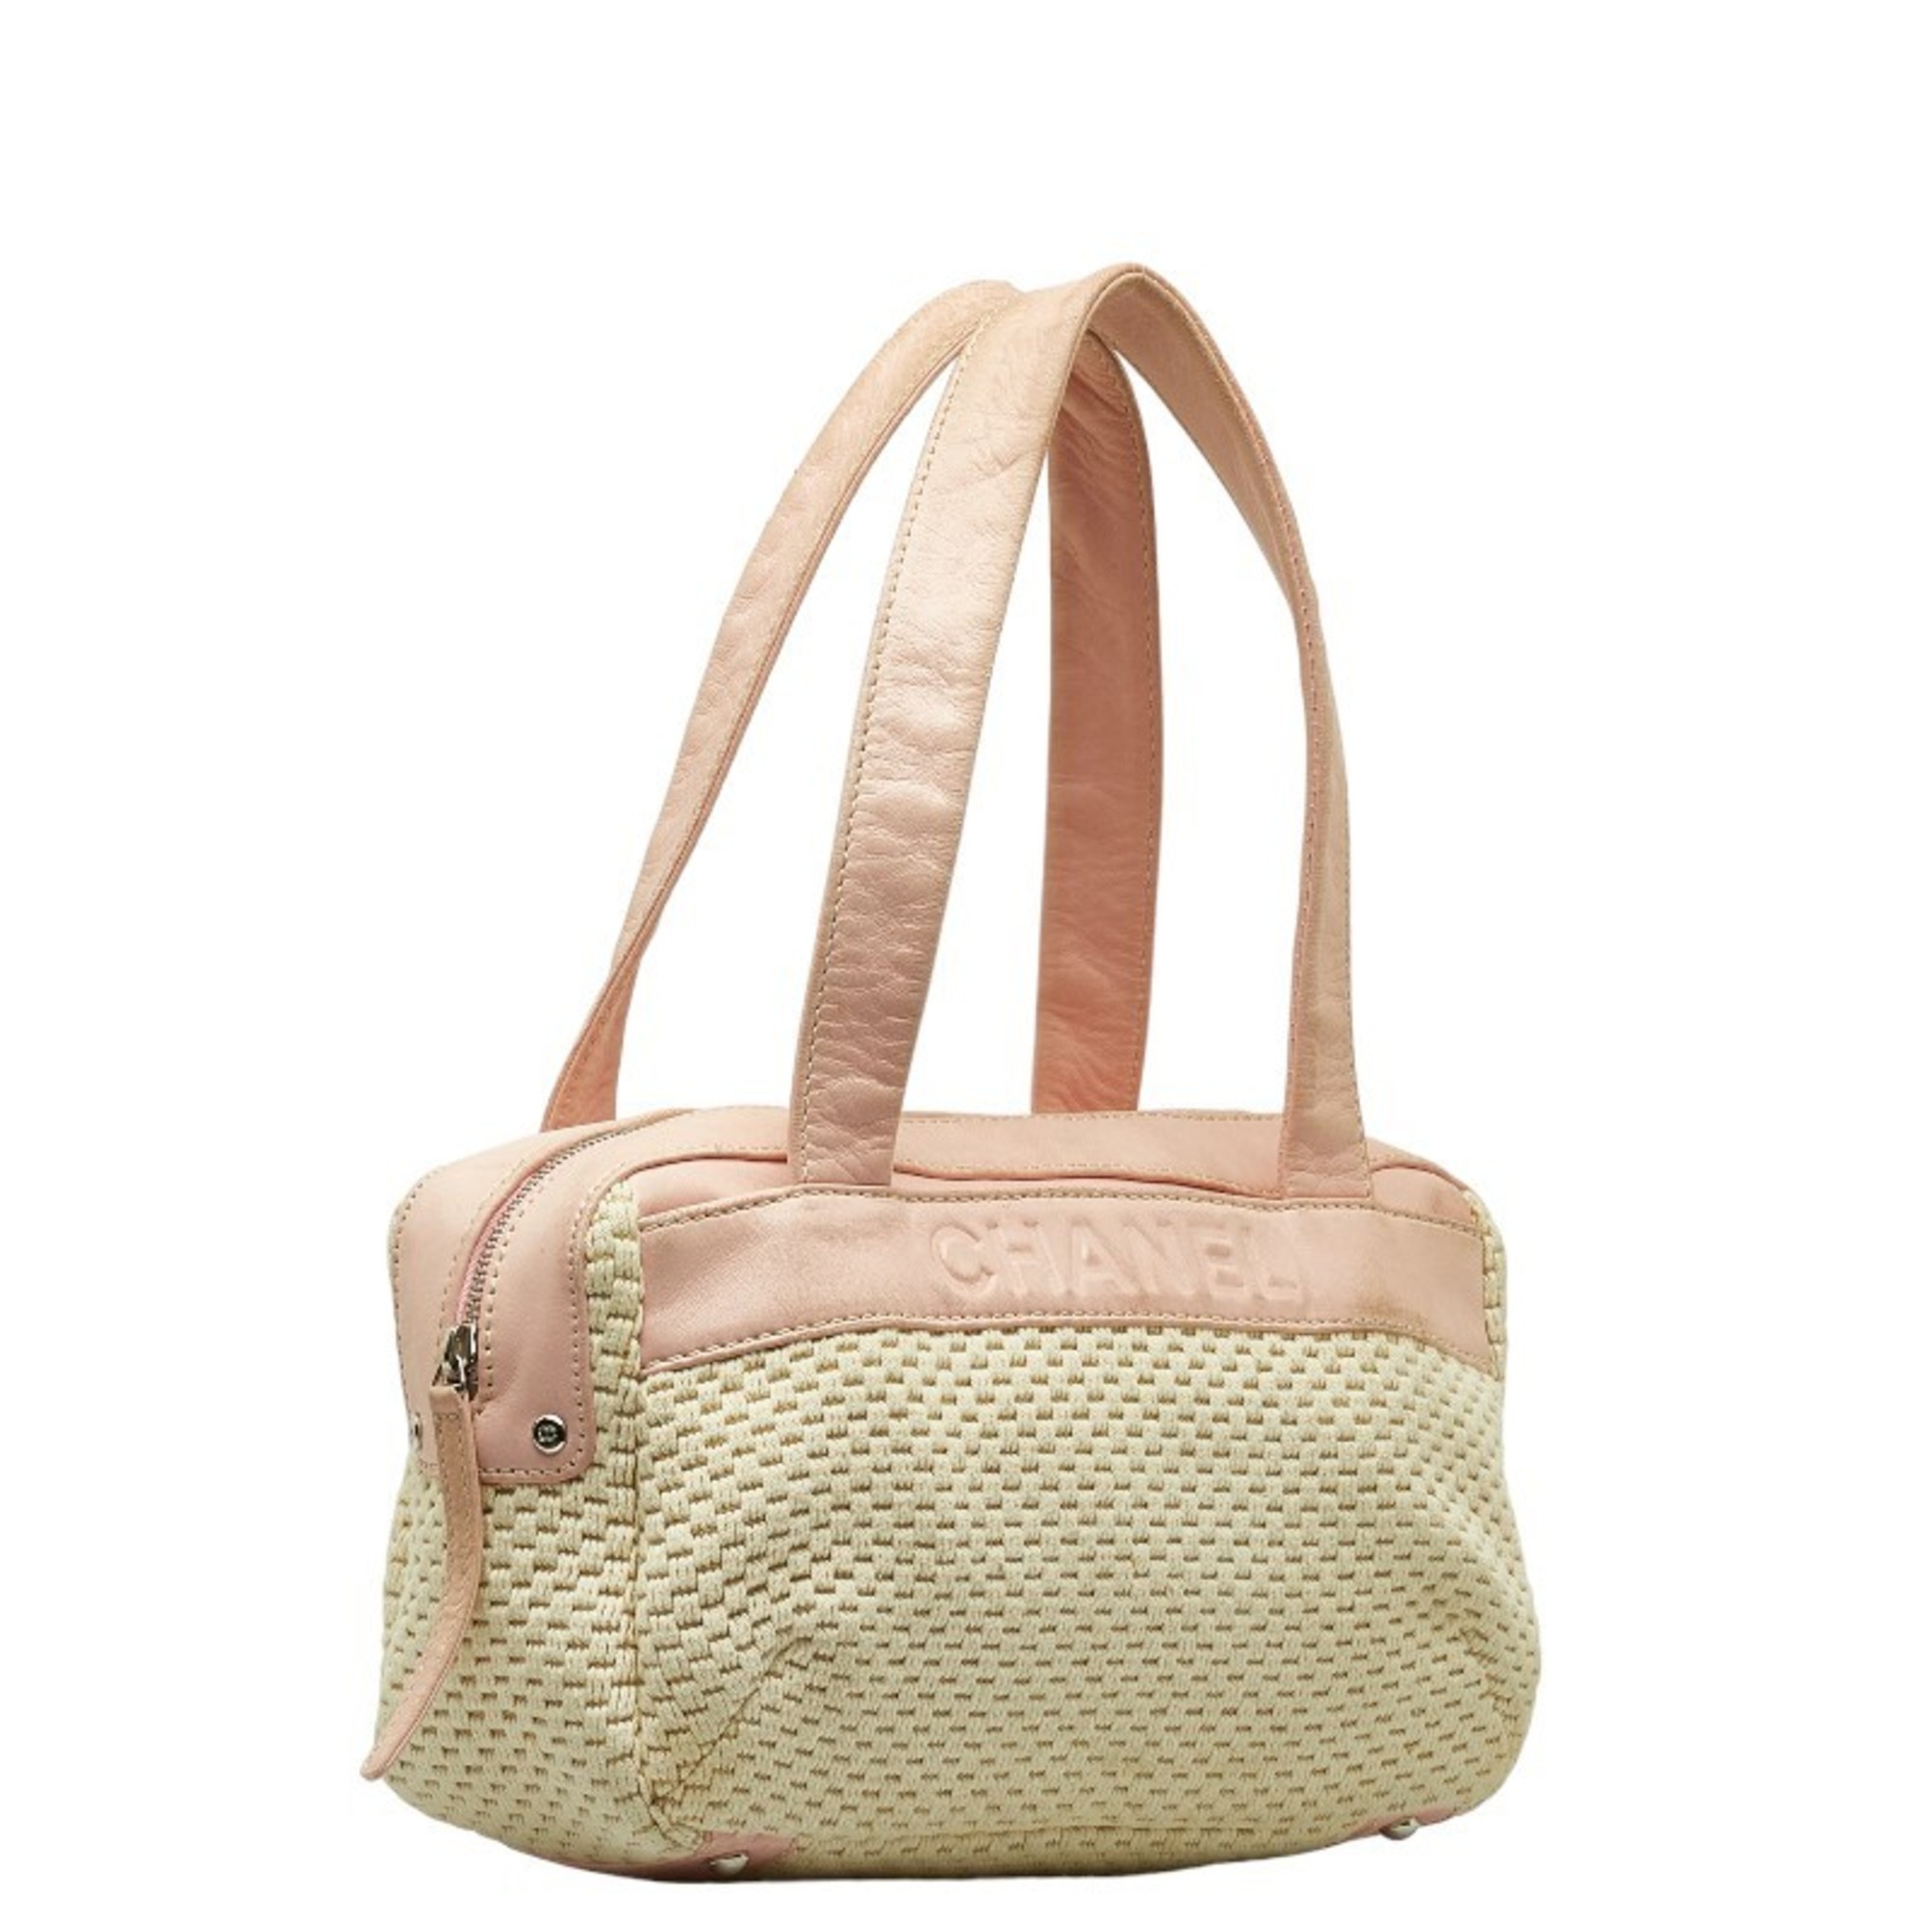 Chanel Bag Handbag Pink Natural Leather Cotton Women's CHANEL